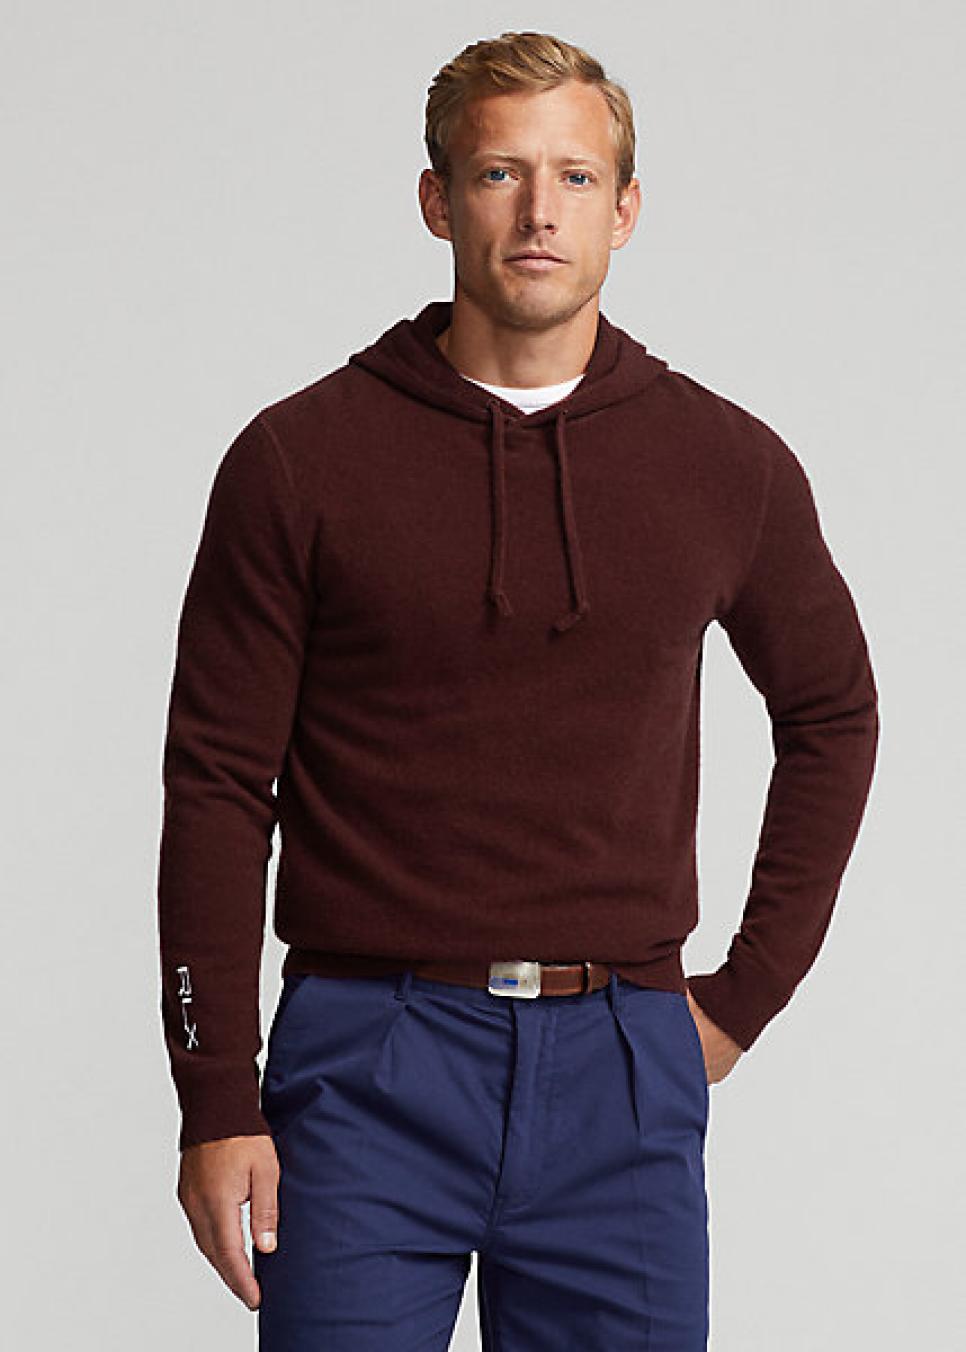 rx-ralphlaurenrlx-golf-mens-cashmere-hooded-sweater-.jpeg